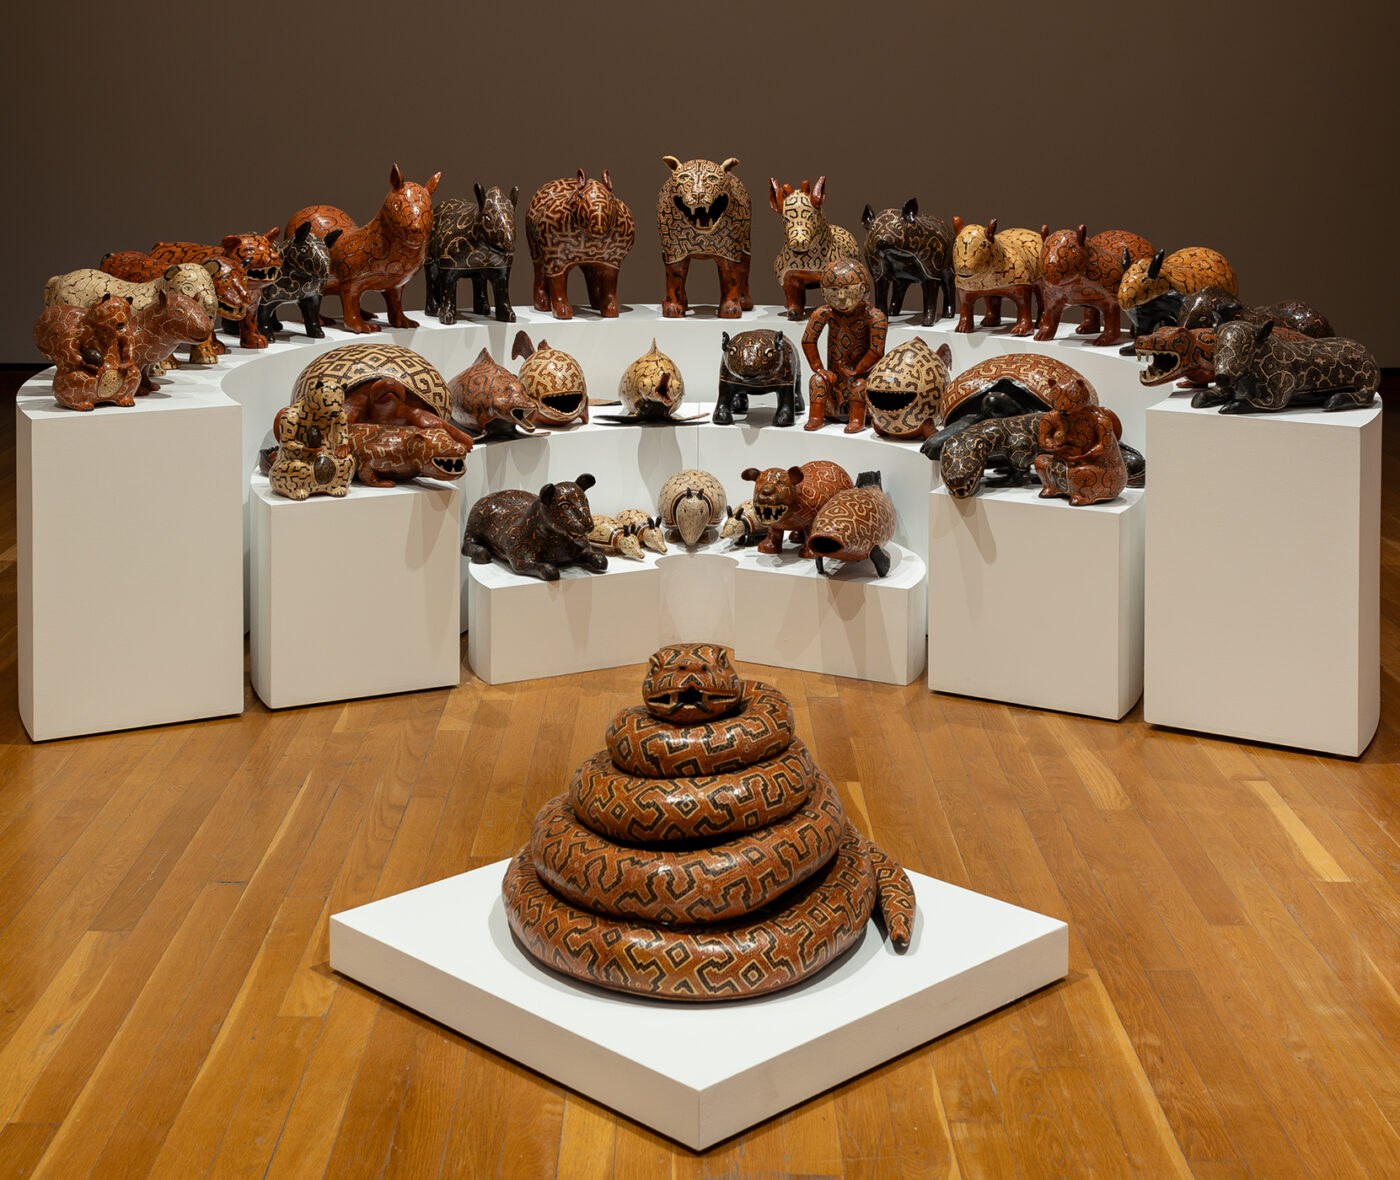 Four rows of different ceramic animal figures